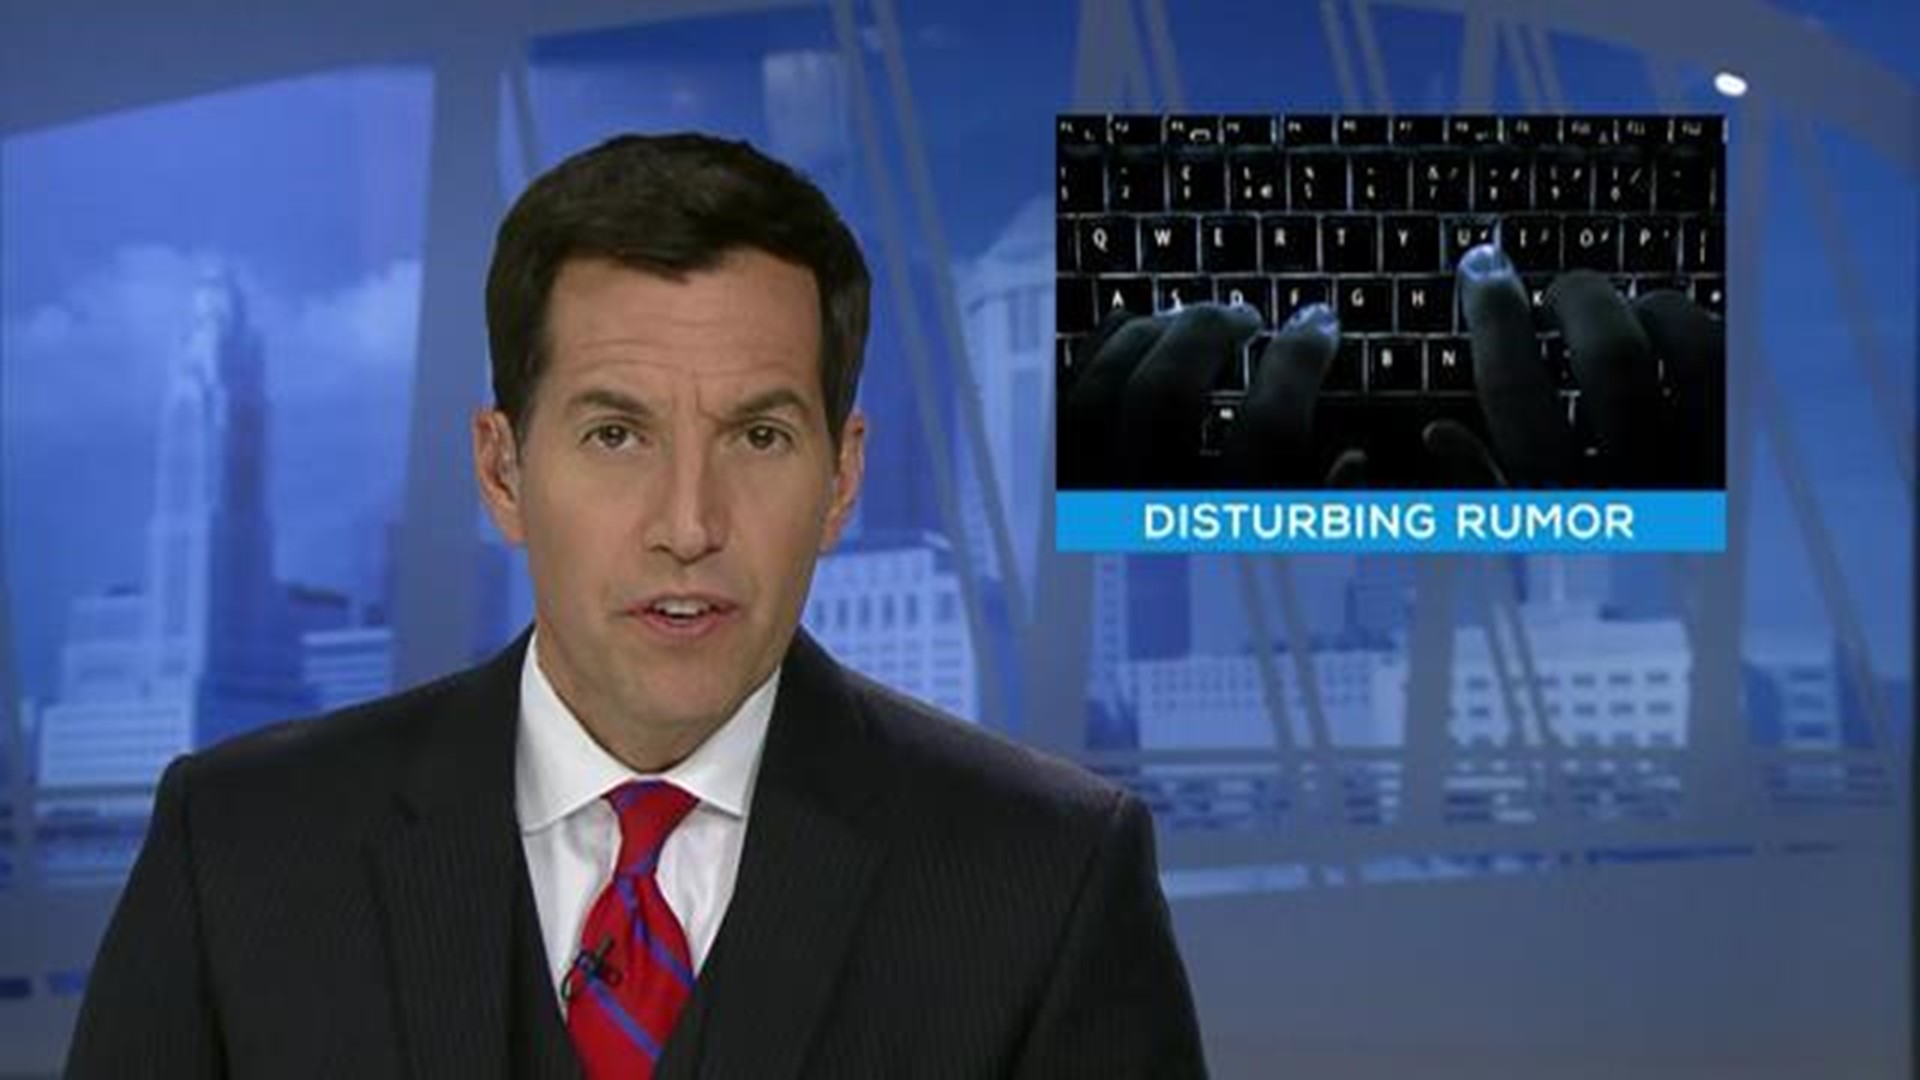 Pirnvide - Porn video being shared at central Ohio schools spurring false rumors |  10tv.com